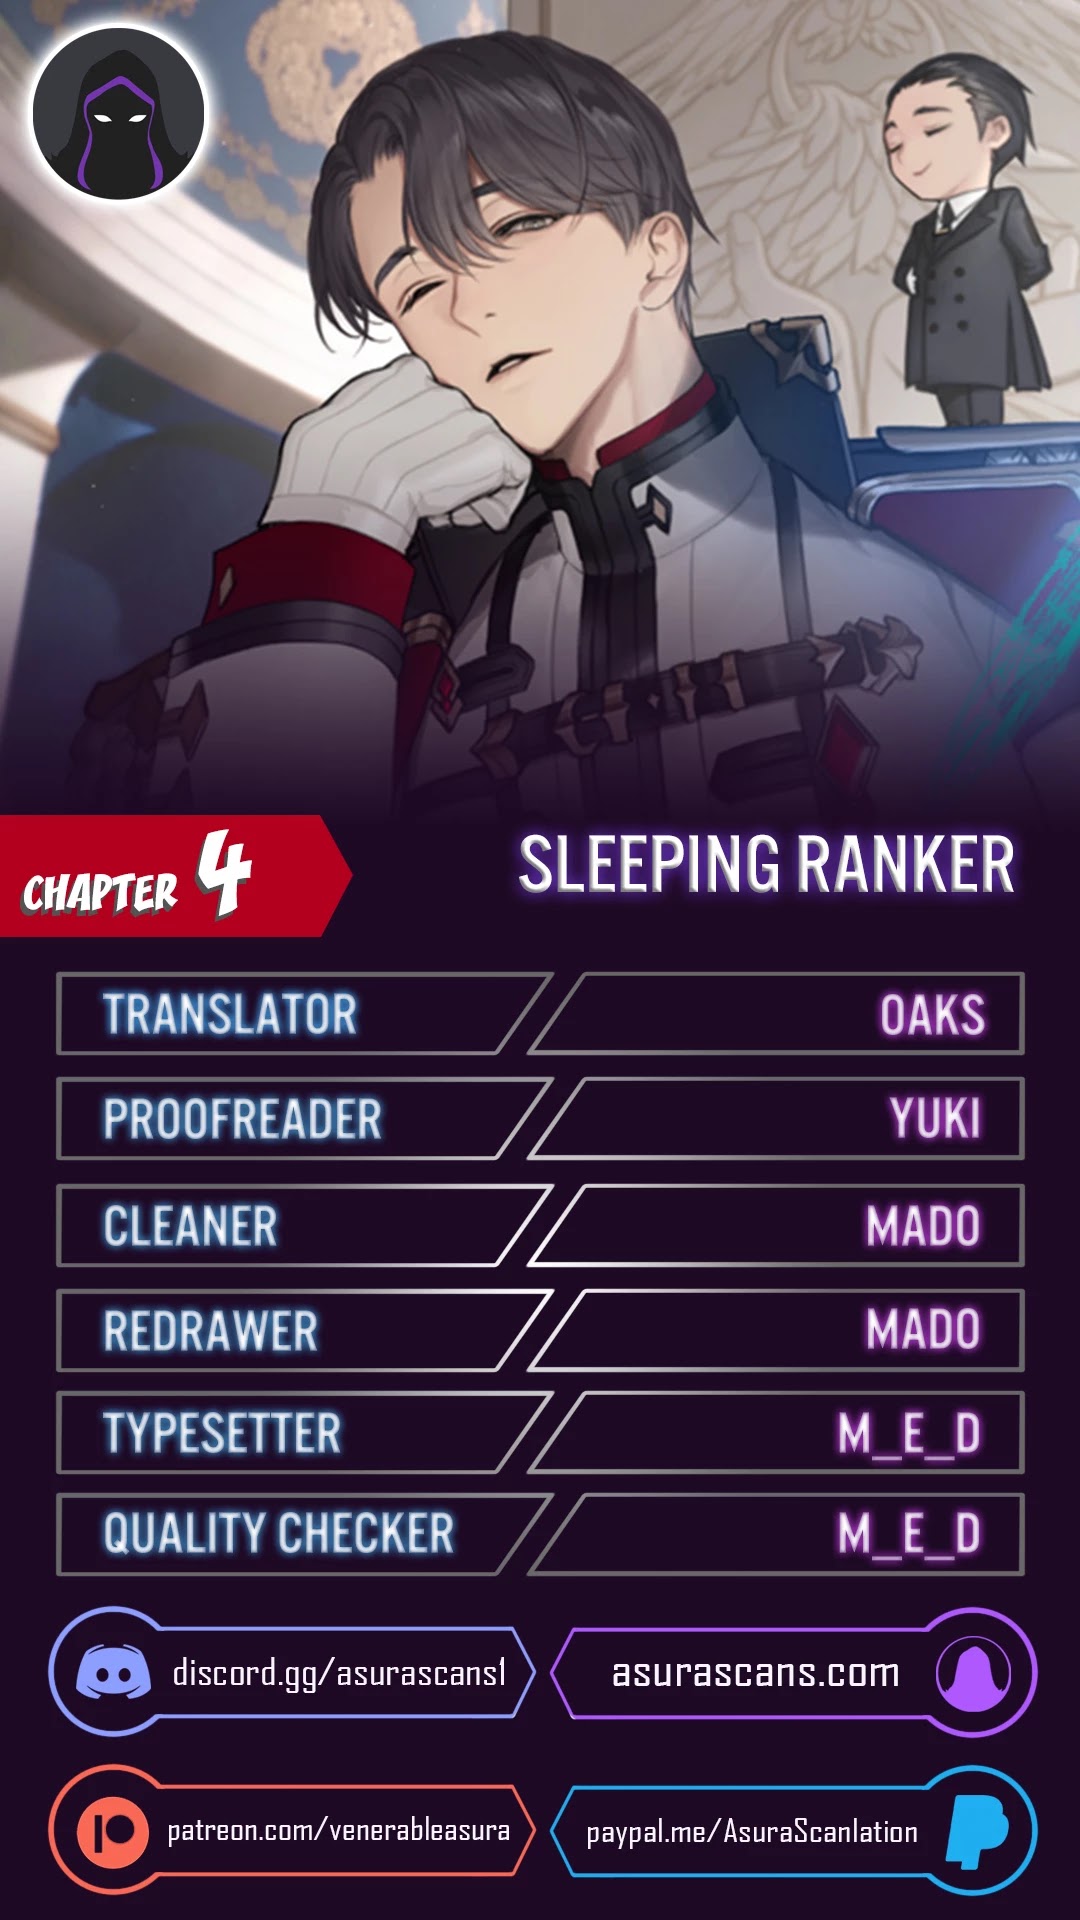 Sleeping Ranker Chapter 4